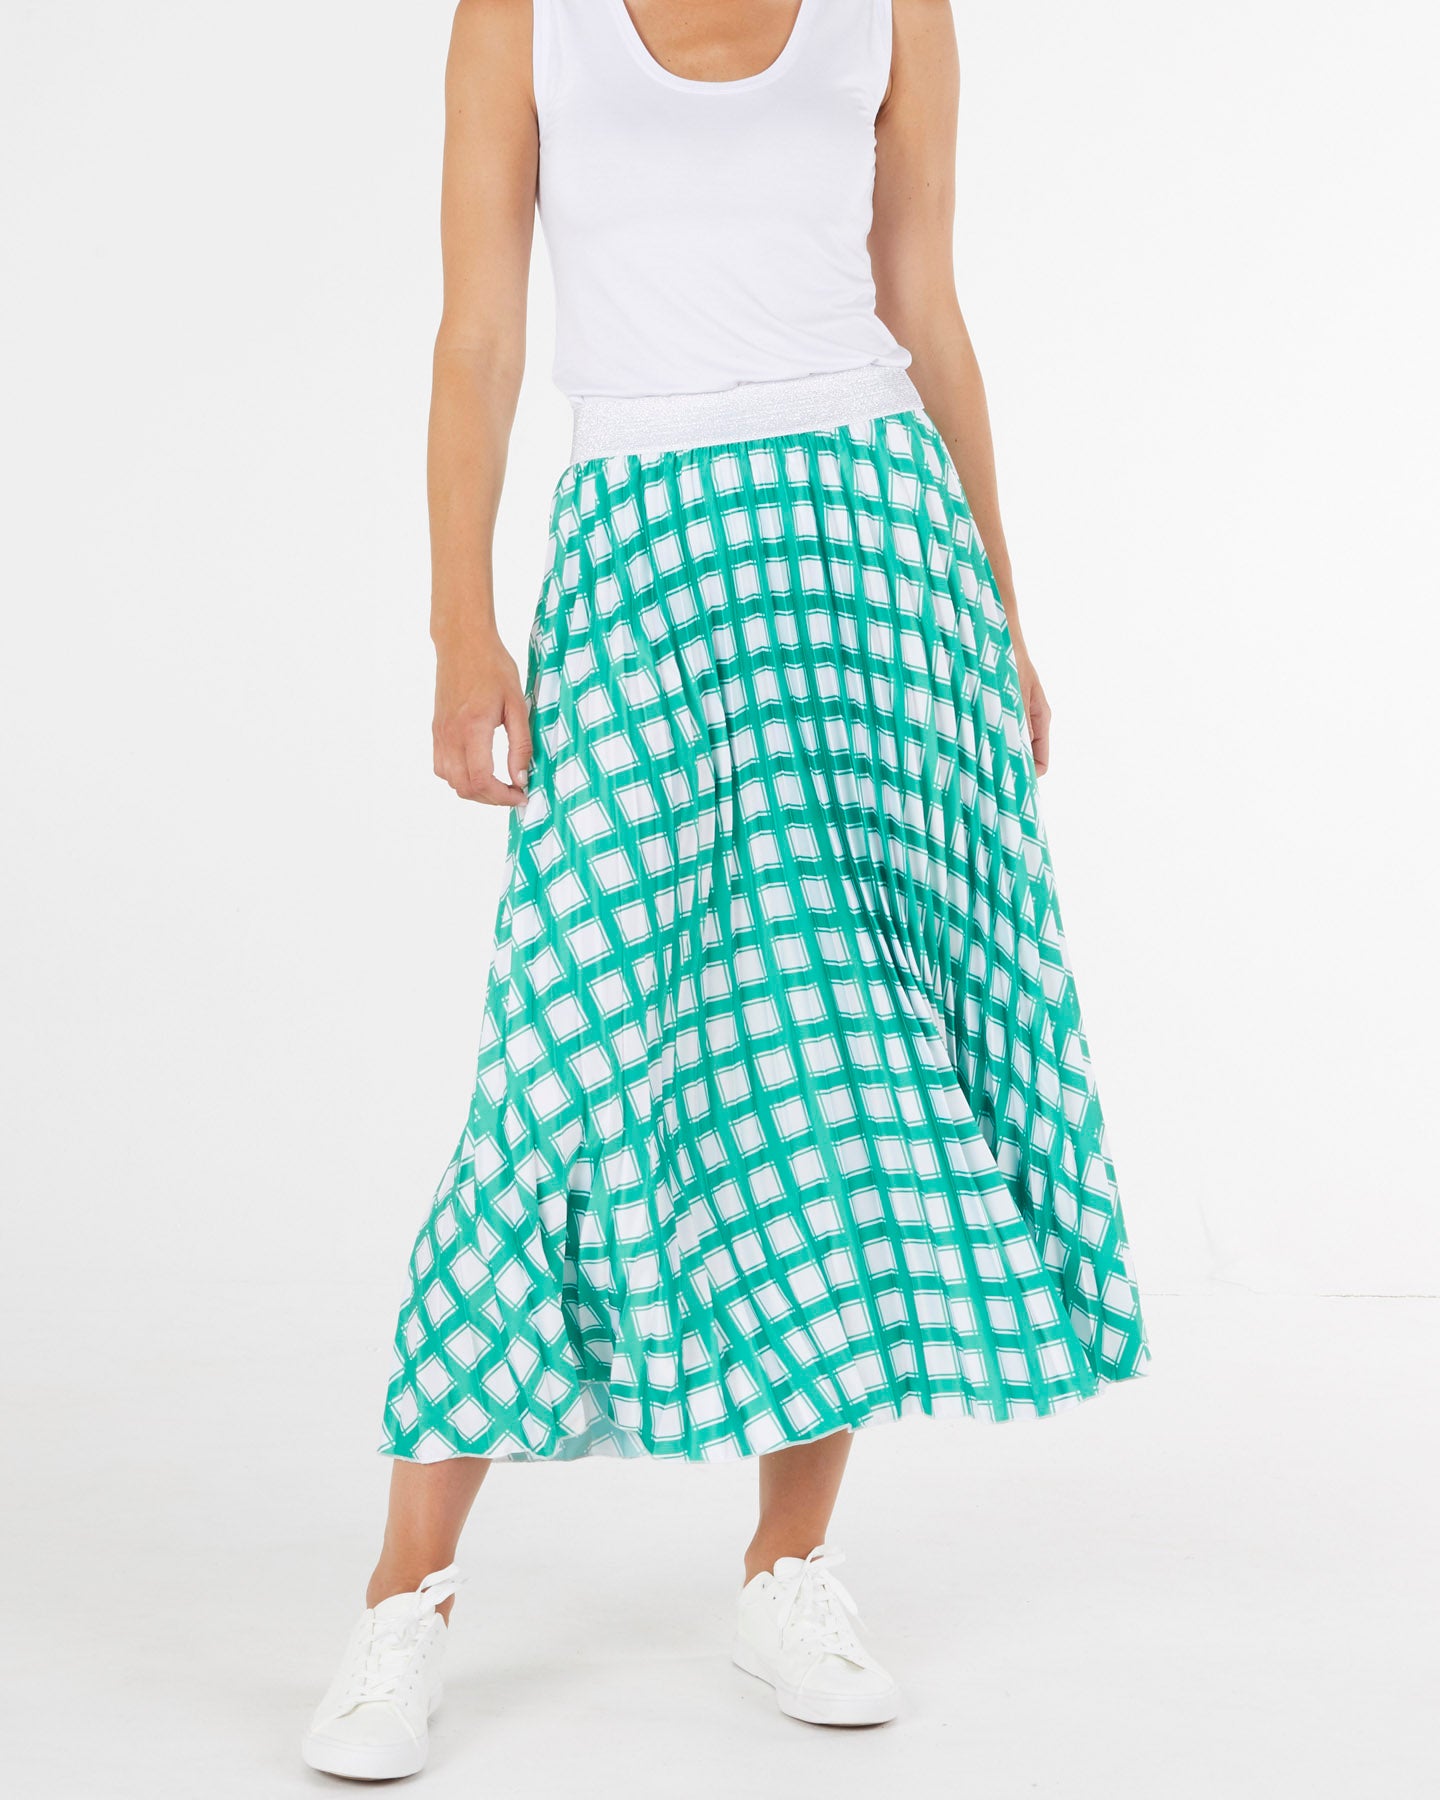 Kit Pleated Skirt in Chevron, BETTY BASICS